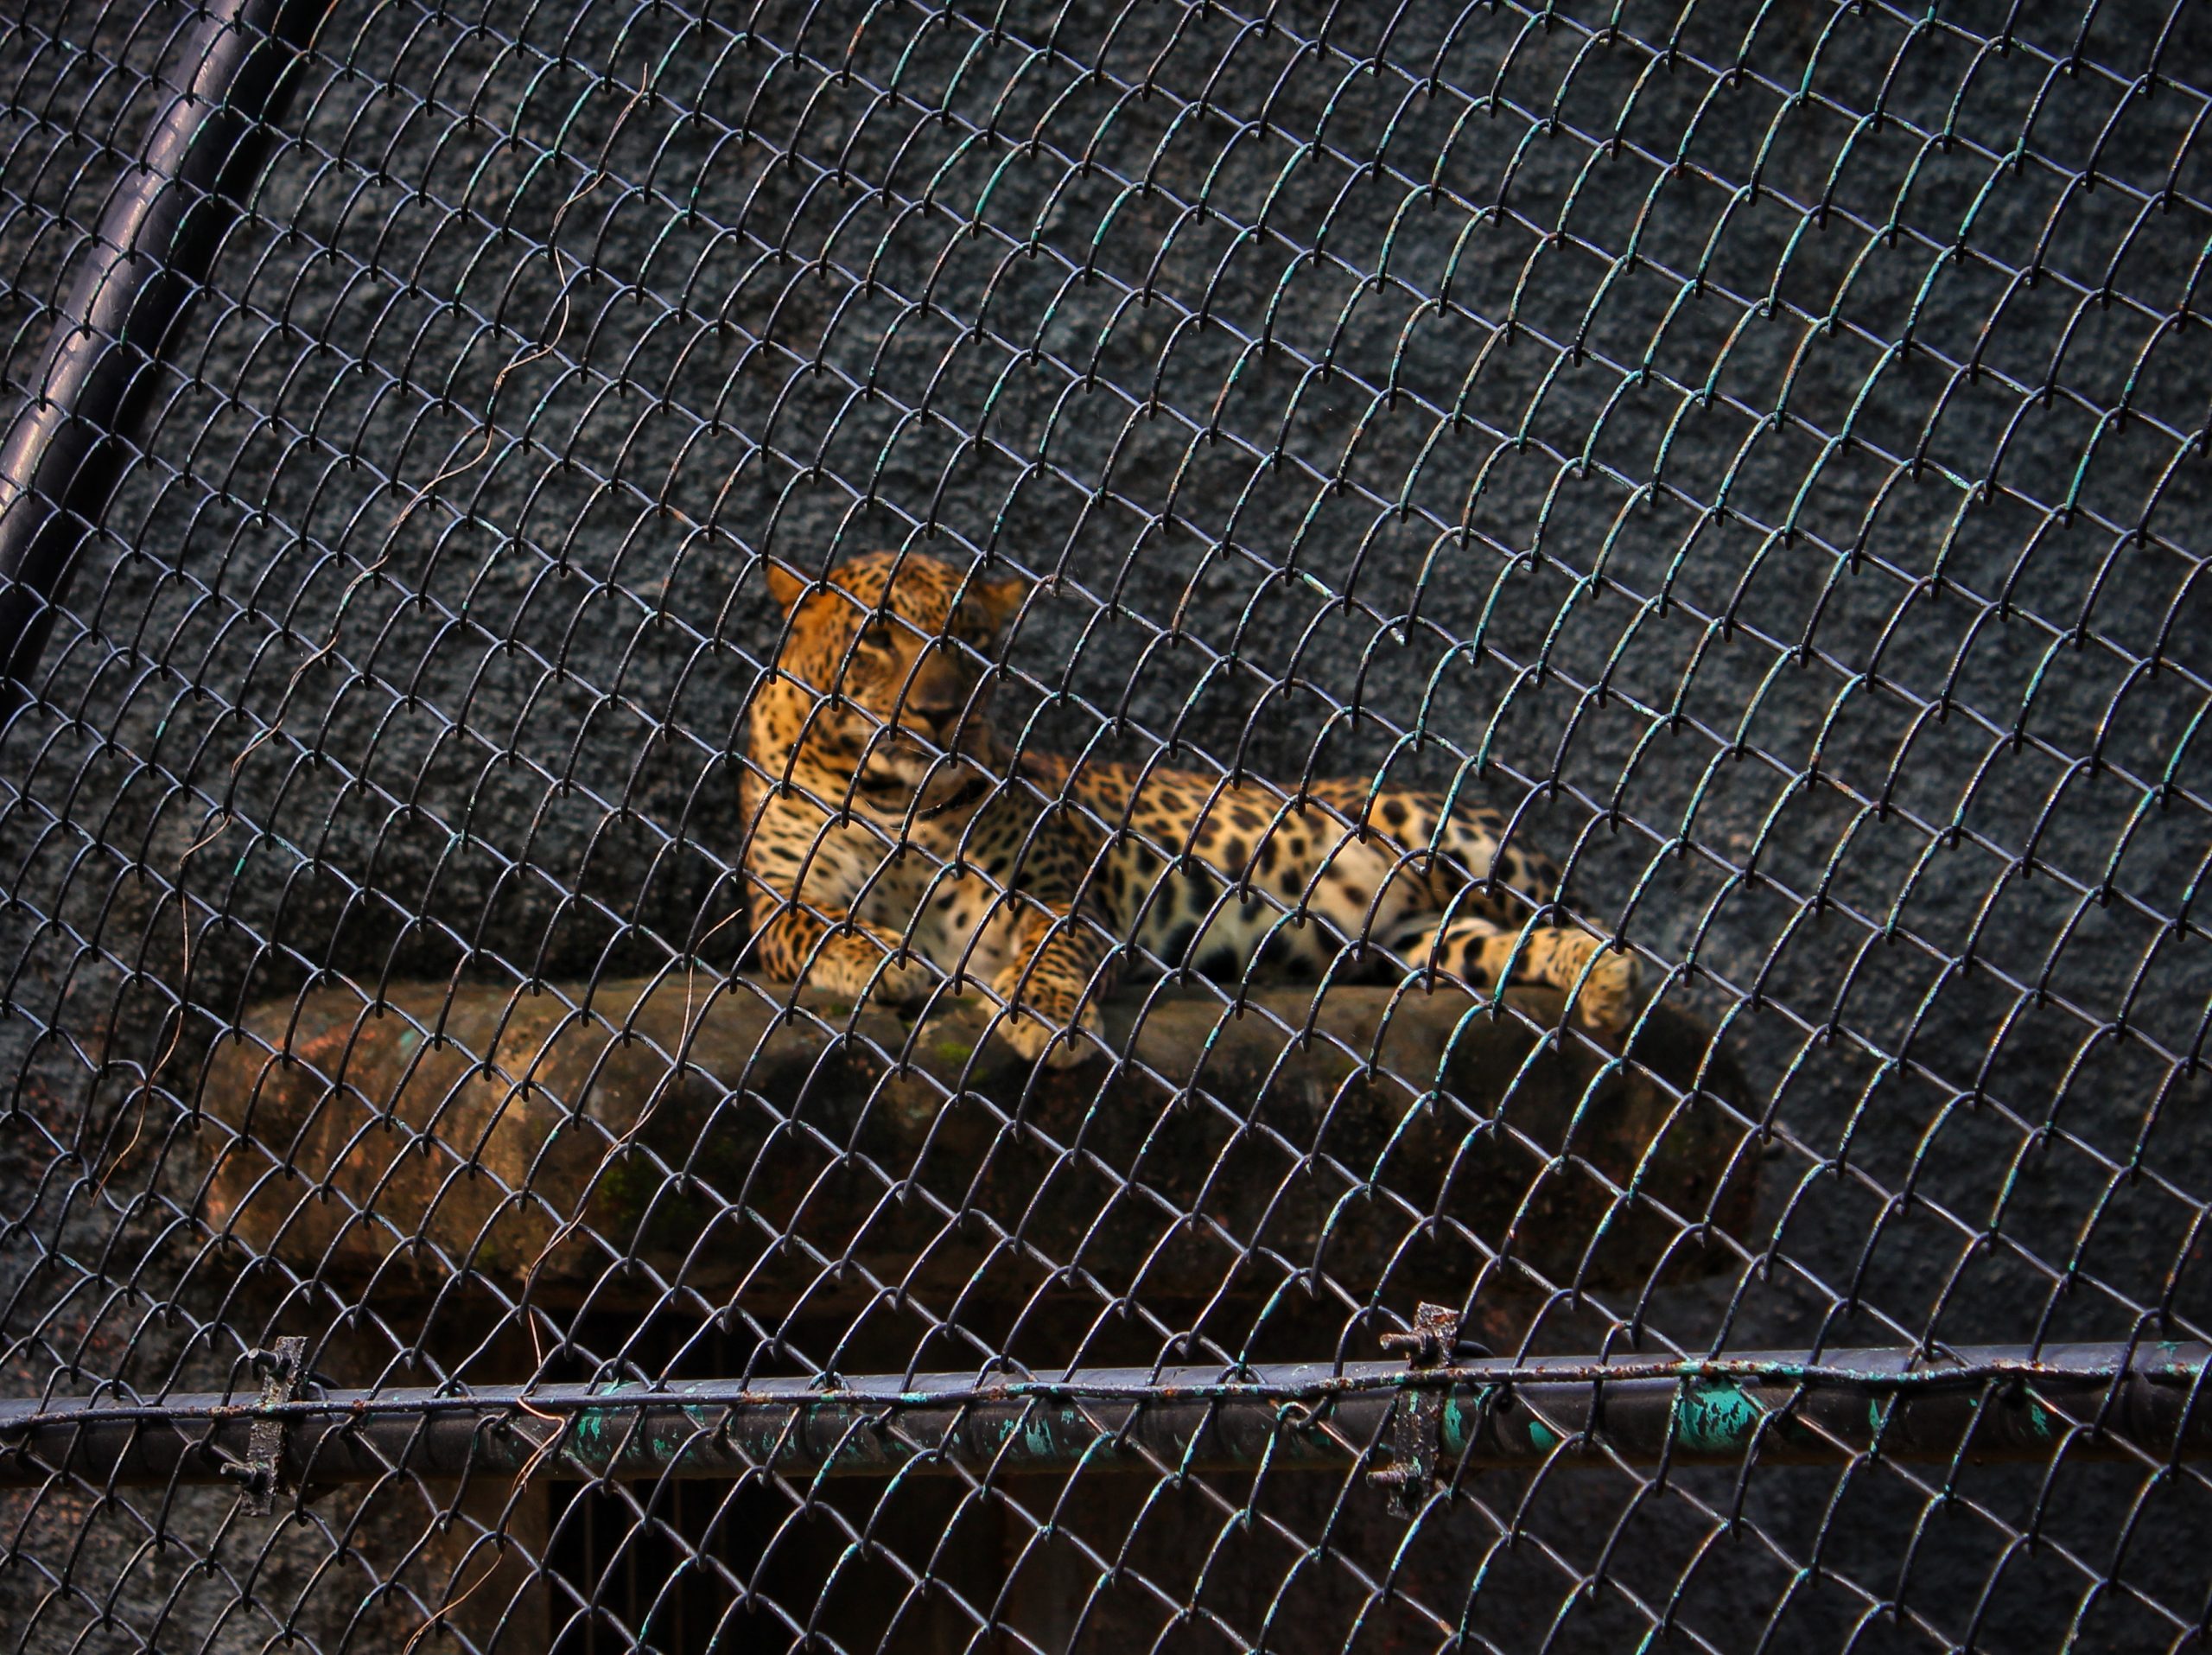 Leopard sitting on rock behind the net